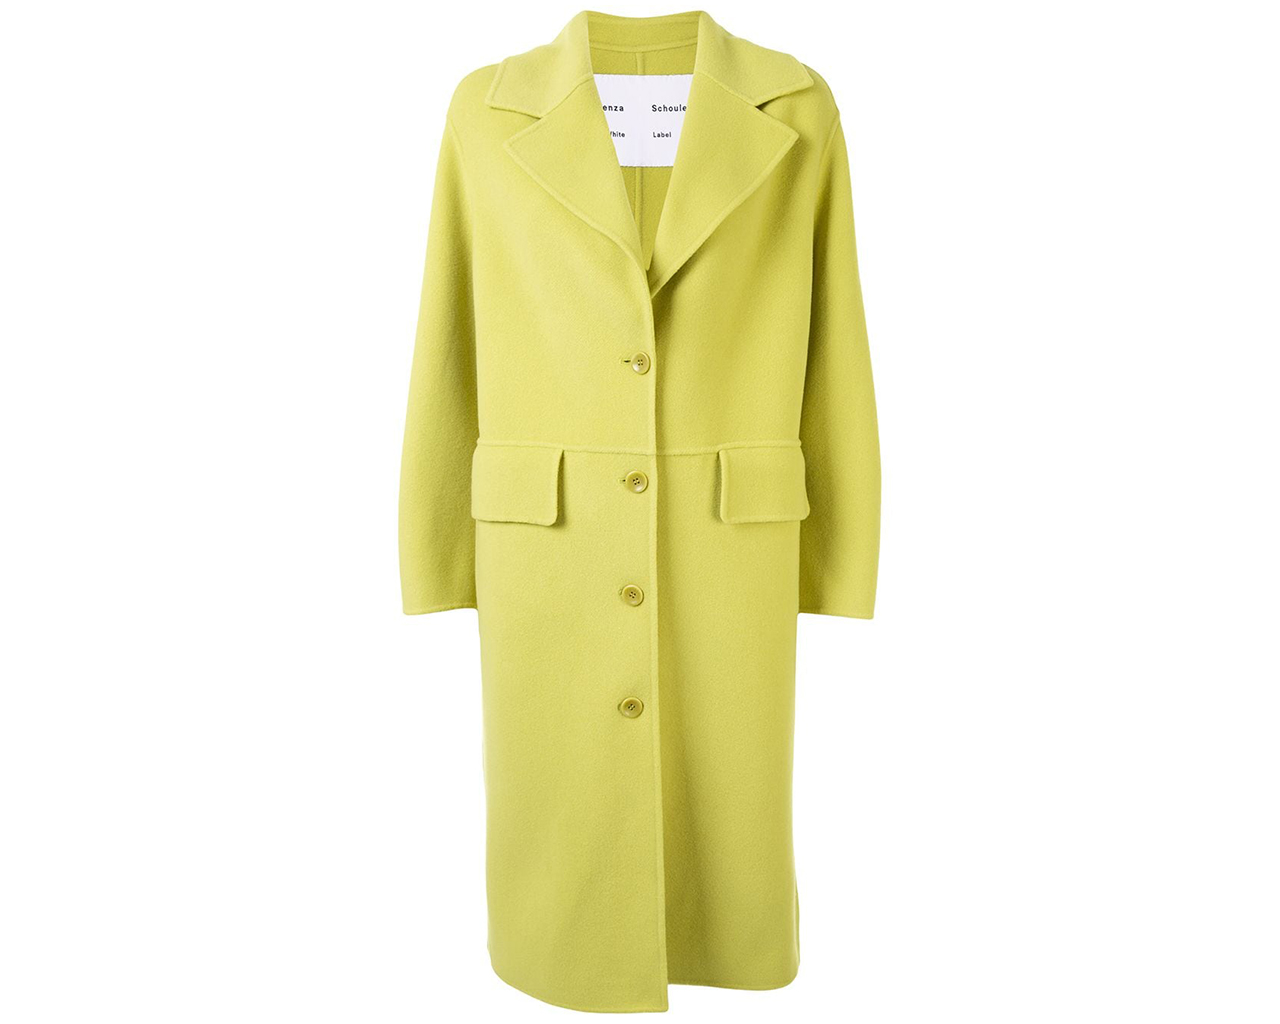 Shop Chartreuse Yellow Coats Inspired by Demi Lovato - GRAZIA USA